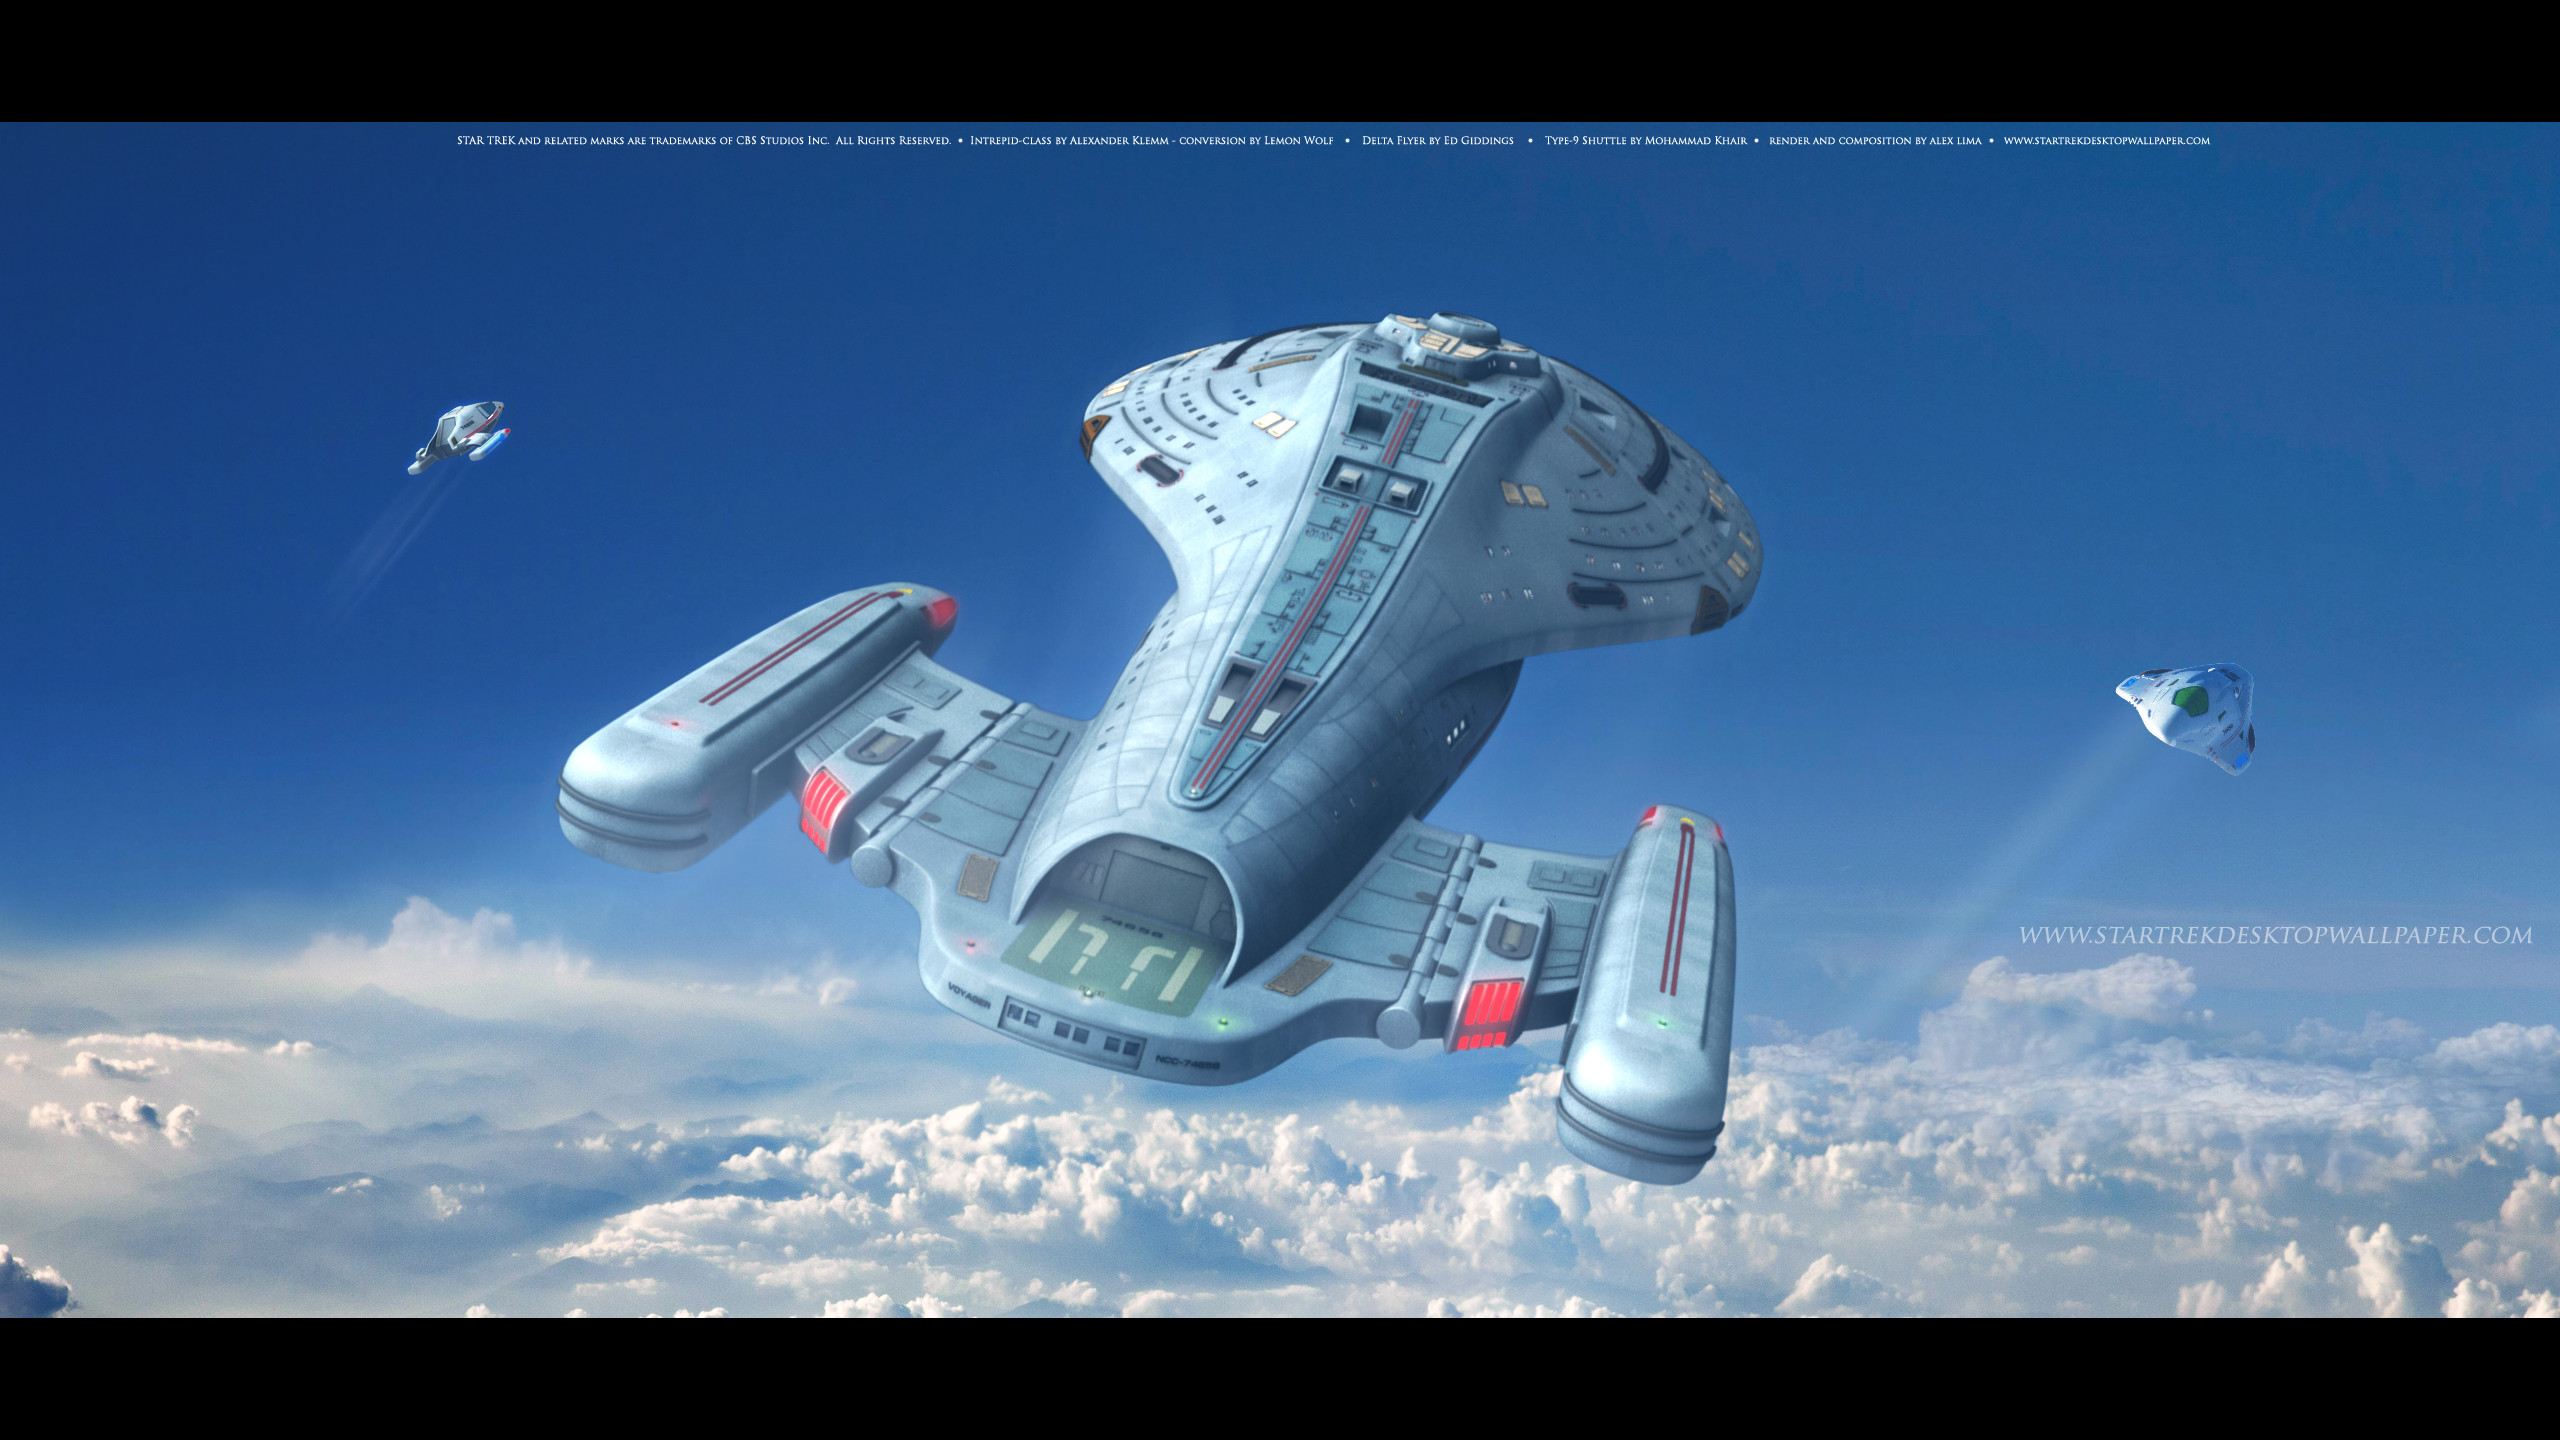 Star Trek Intrepid Class Starship USS Voyager Above The Clouds. Free Star Trek computer desktop